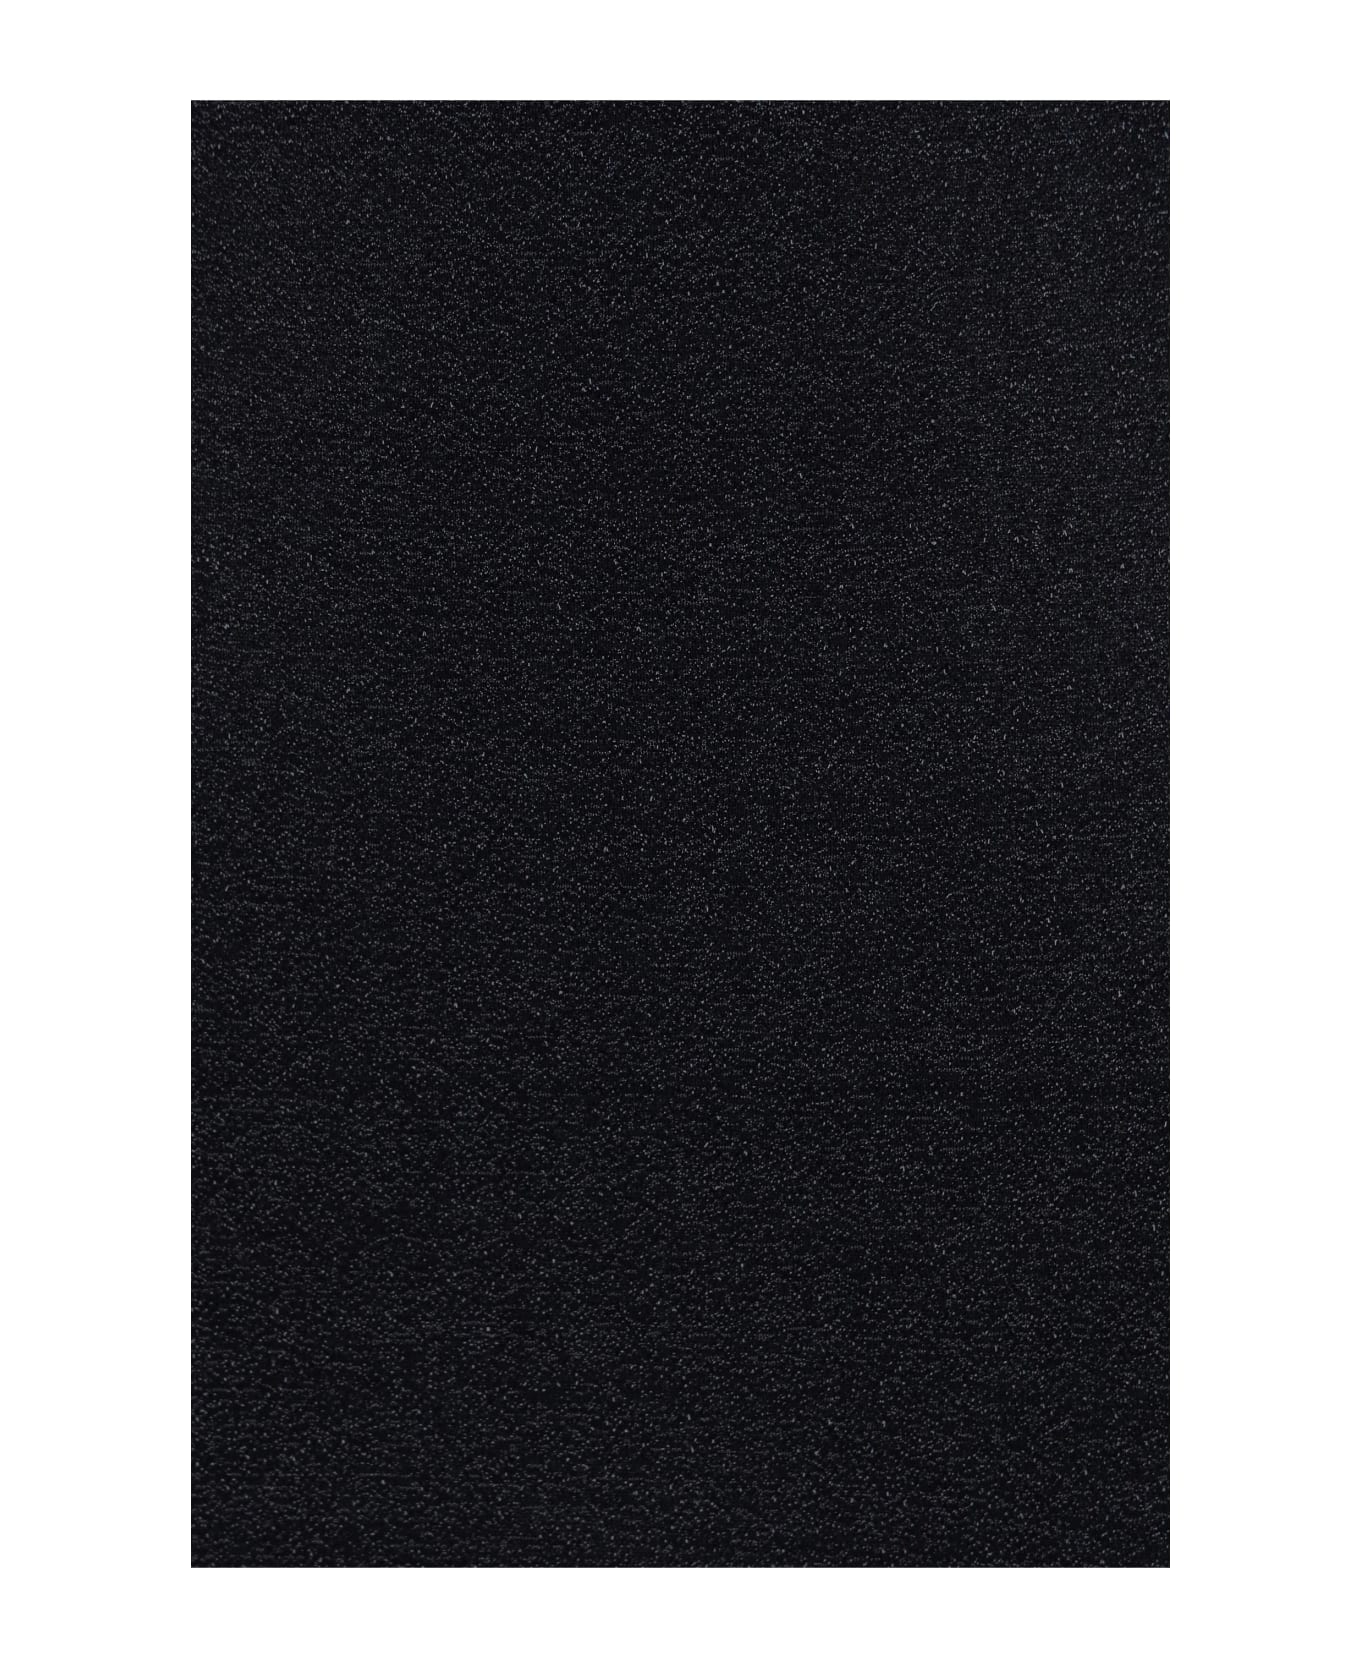 Oseree Lumiere Long Dress - Black